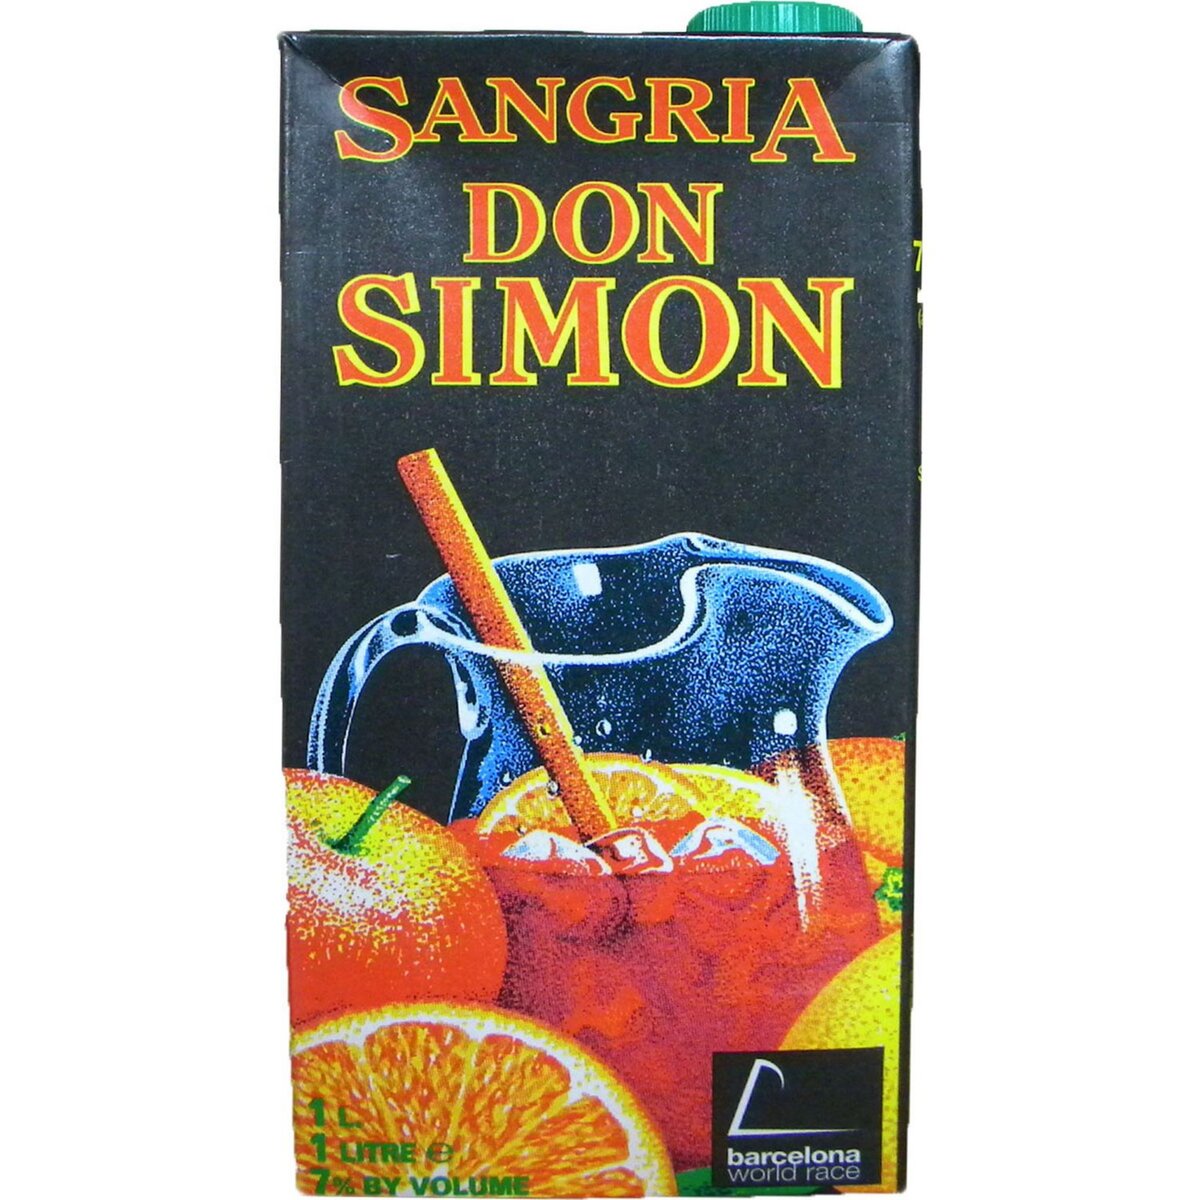 DON SIMON Don simon Sangria 7% 1l 1l